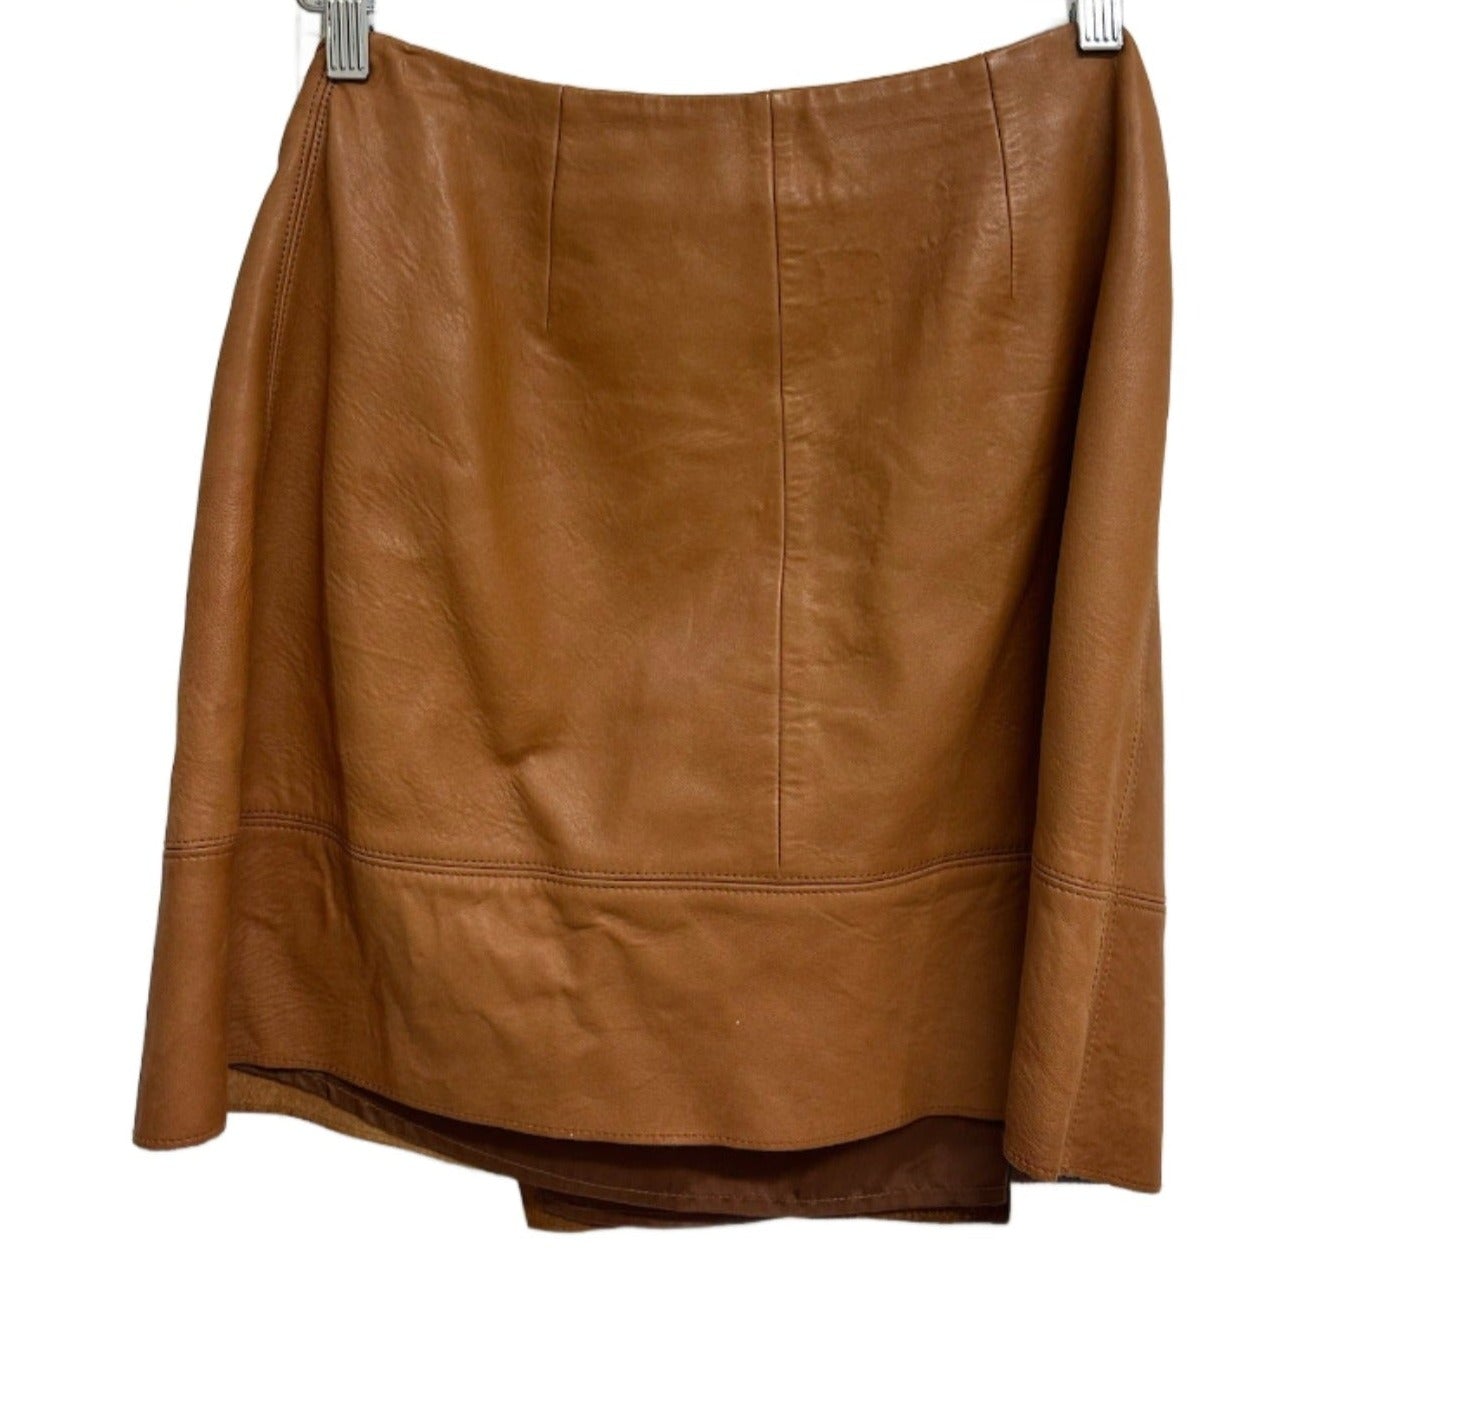 Sass & Bide Tan Leather Wrap Skirt